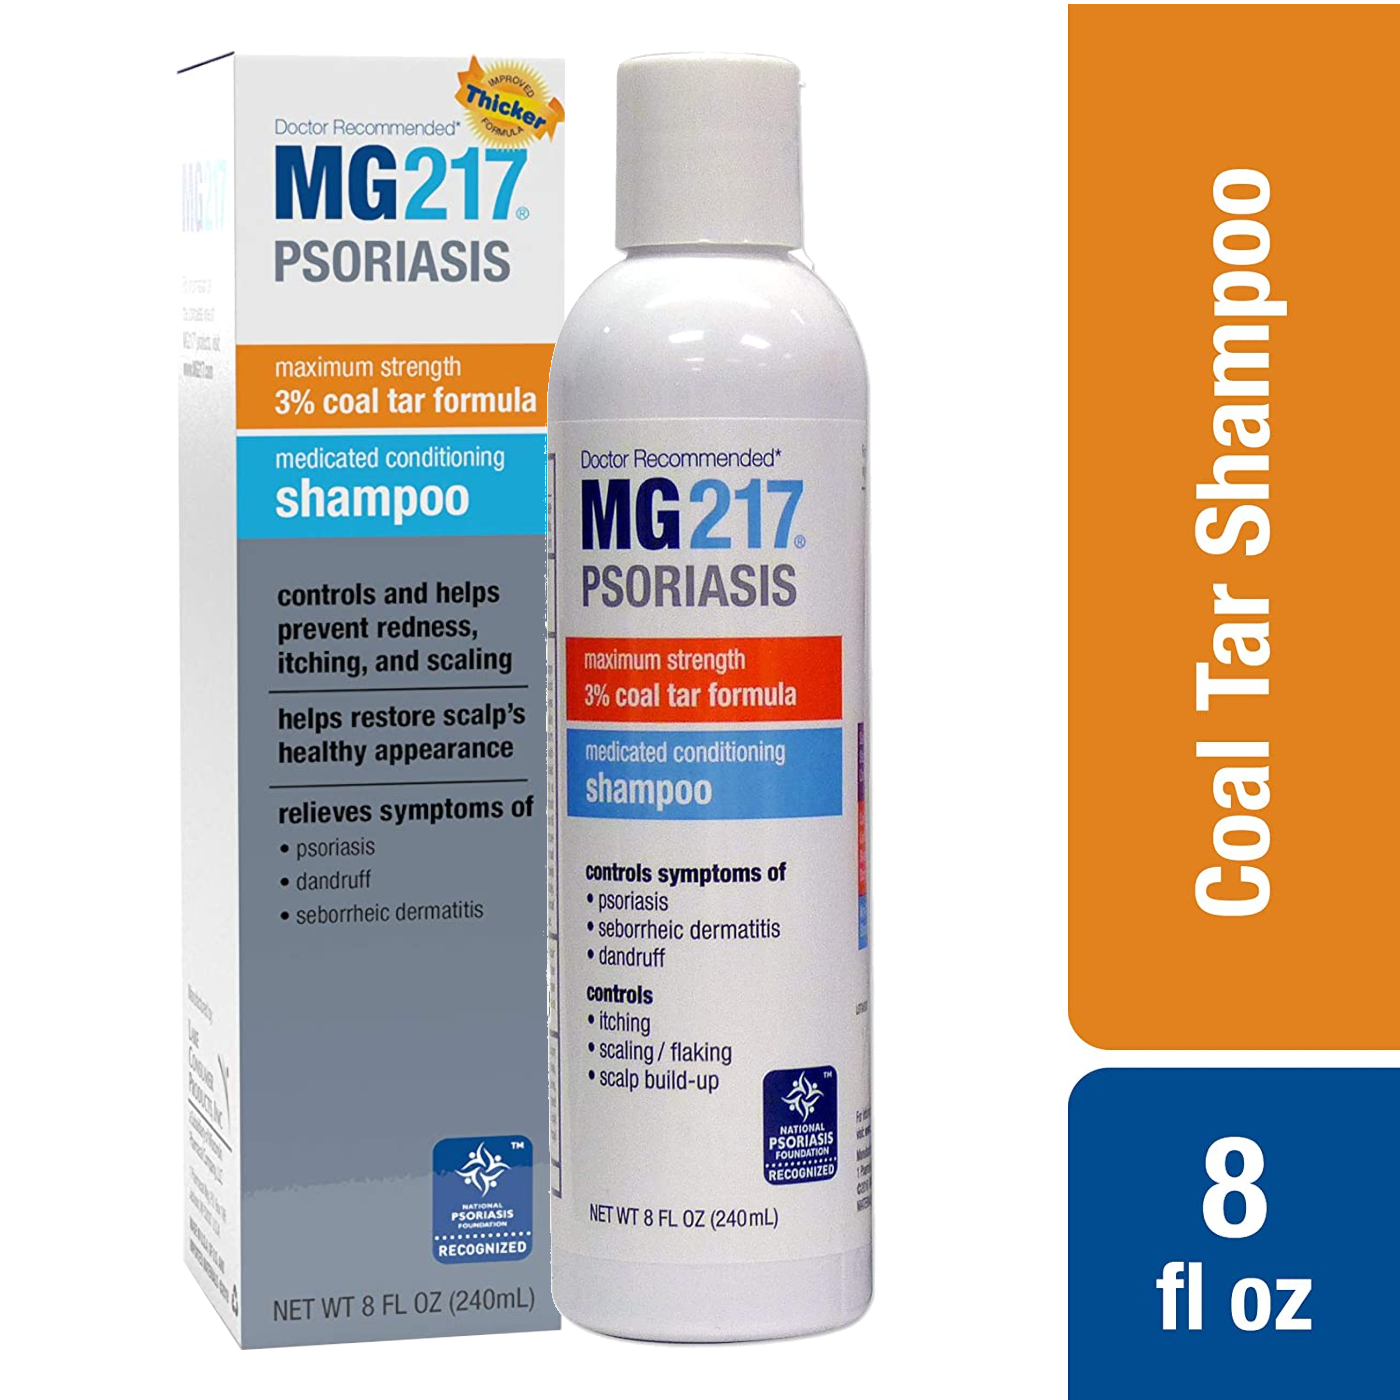 MG217 Psoriasis Medicated Conditioning 3% Coal Tar Shampoo, 8 Fl.Oz